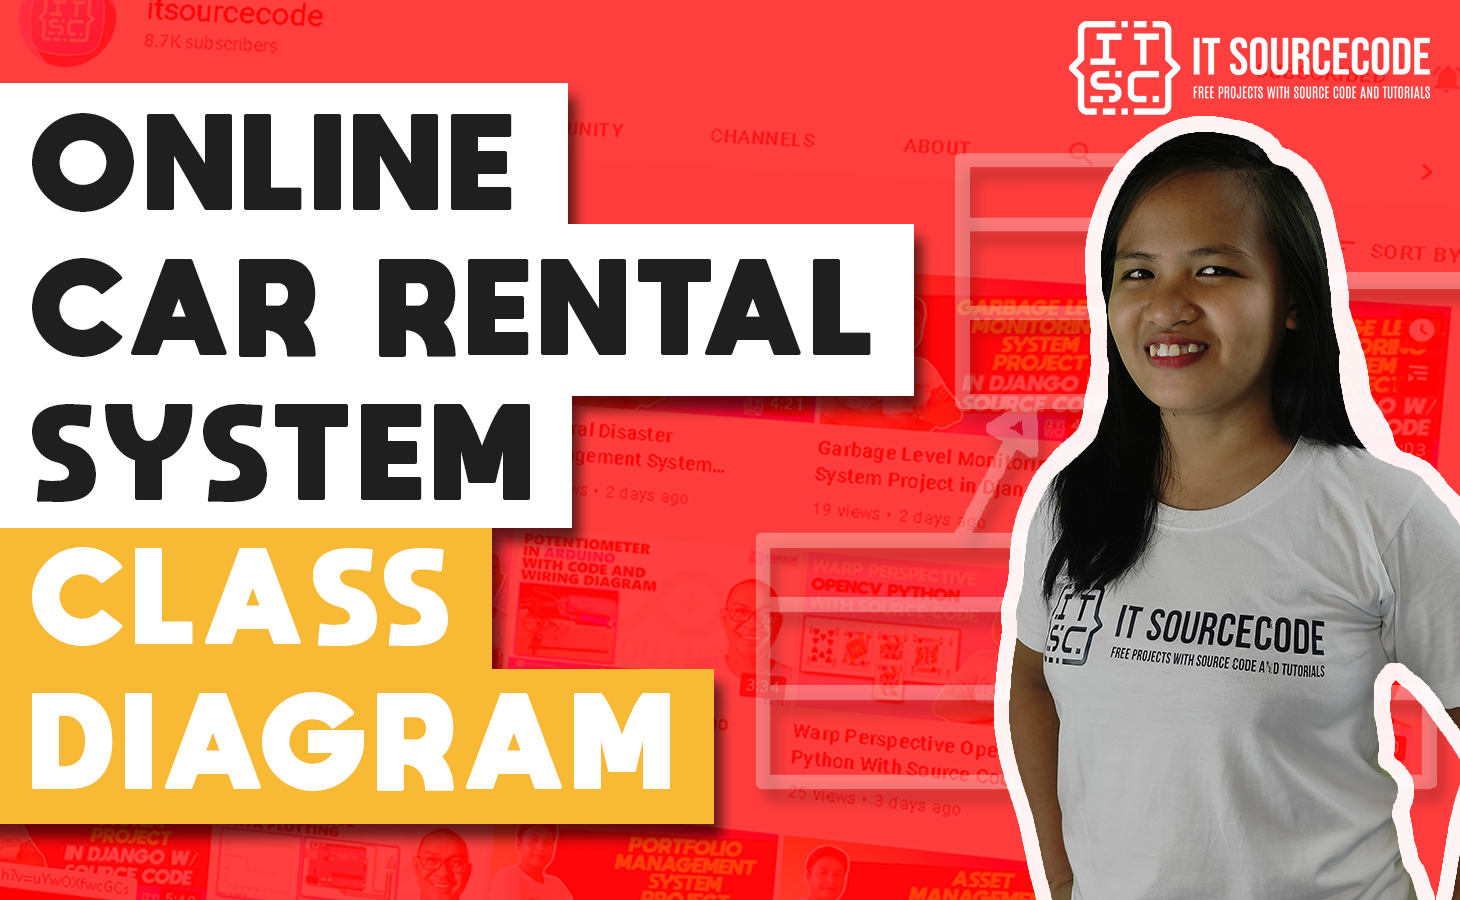 Online Car Rental System Class Diagram